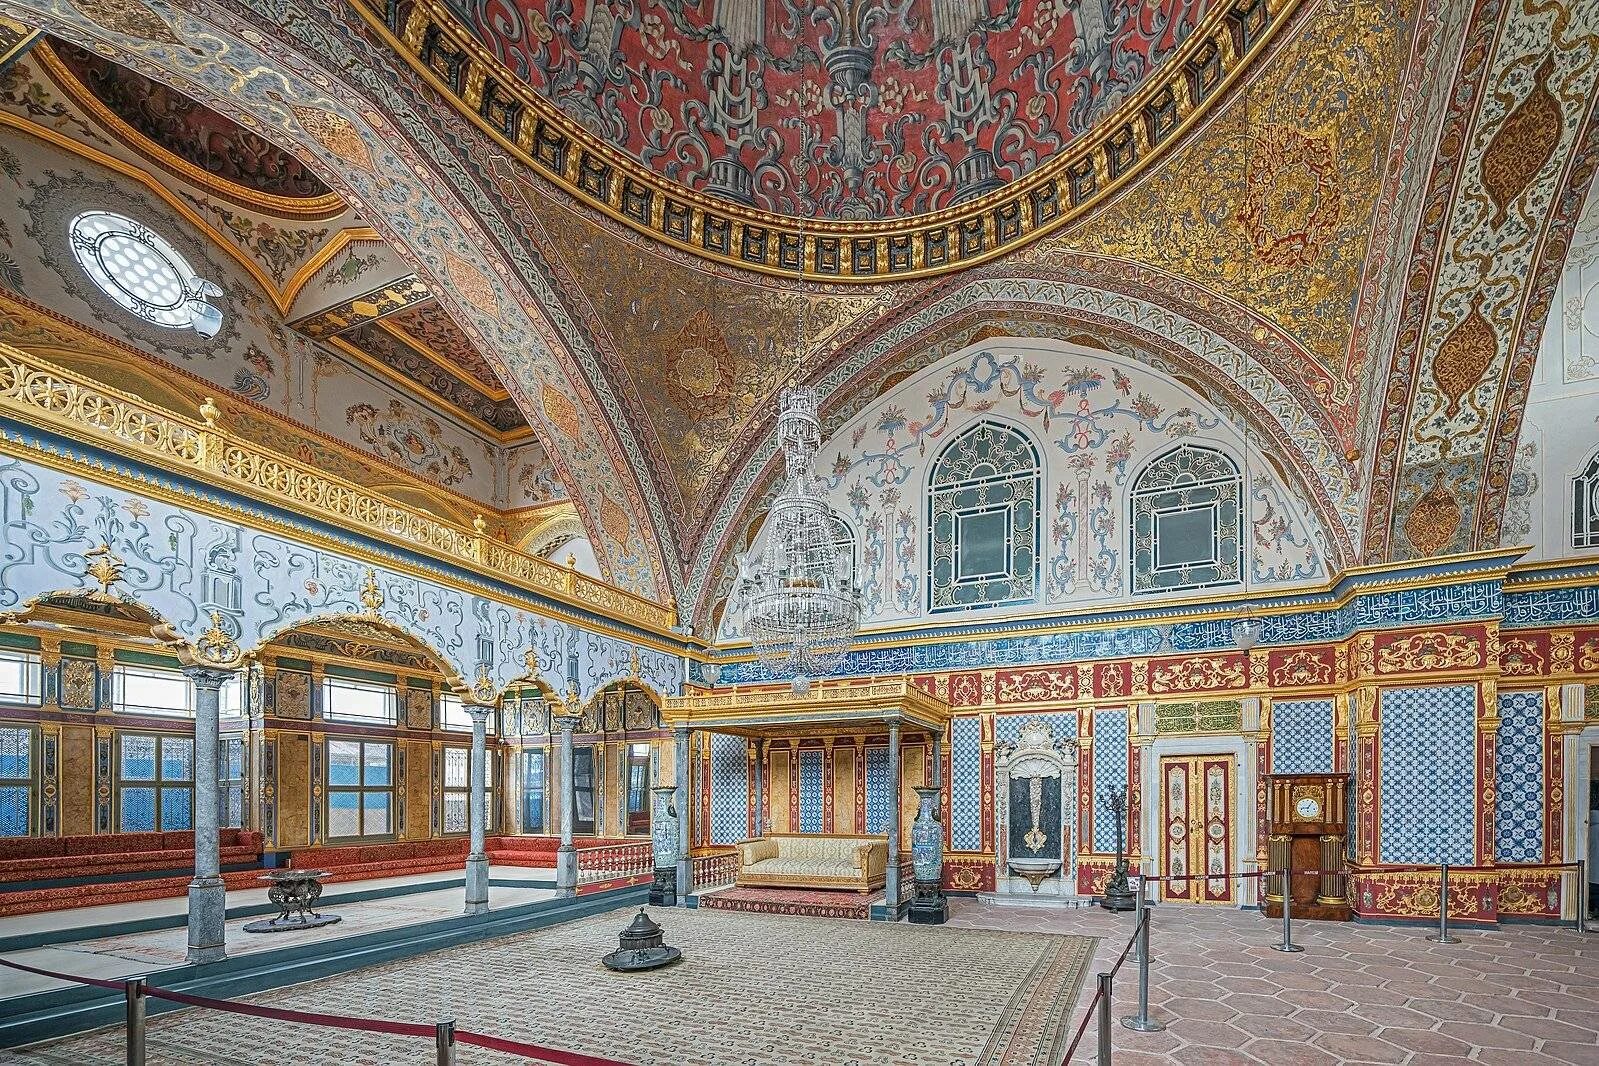 Где жили султаны. Дворец Topkapi в Стамбуле. Турция Топкапы дворец Султана. Дворец Топкапы гарем. Дворец Топкапы (Topkapi Sarayi).